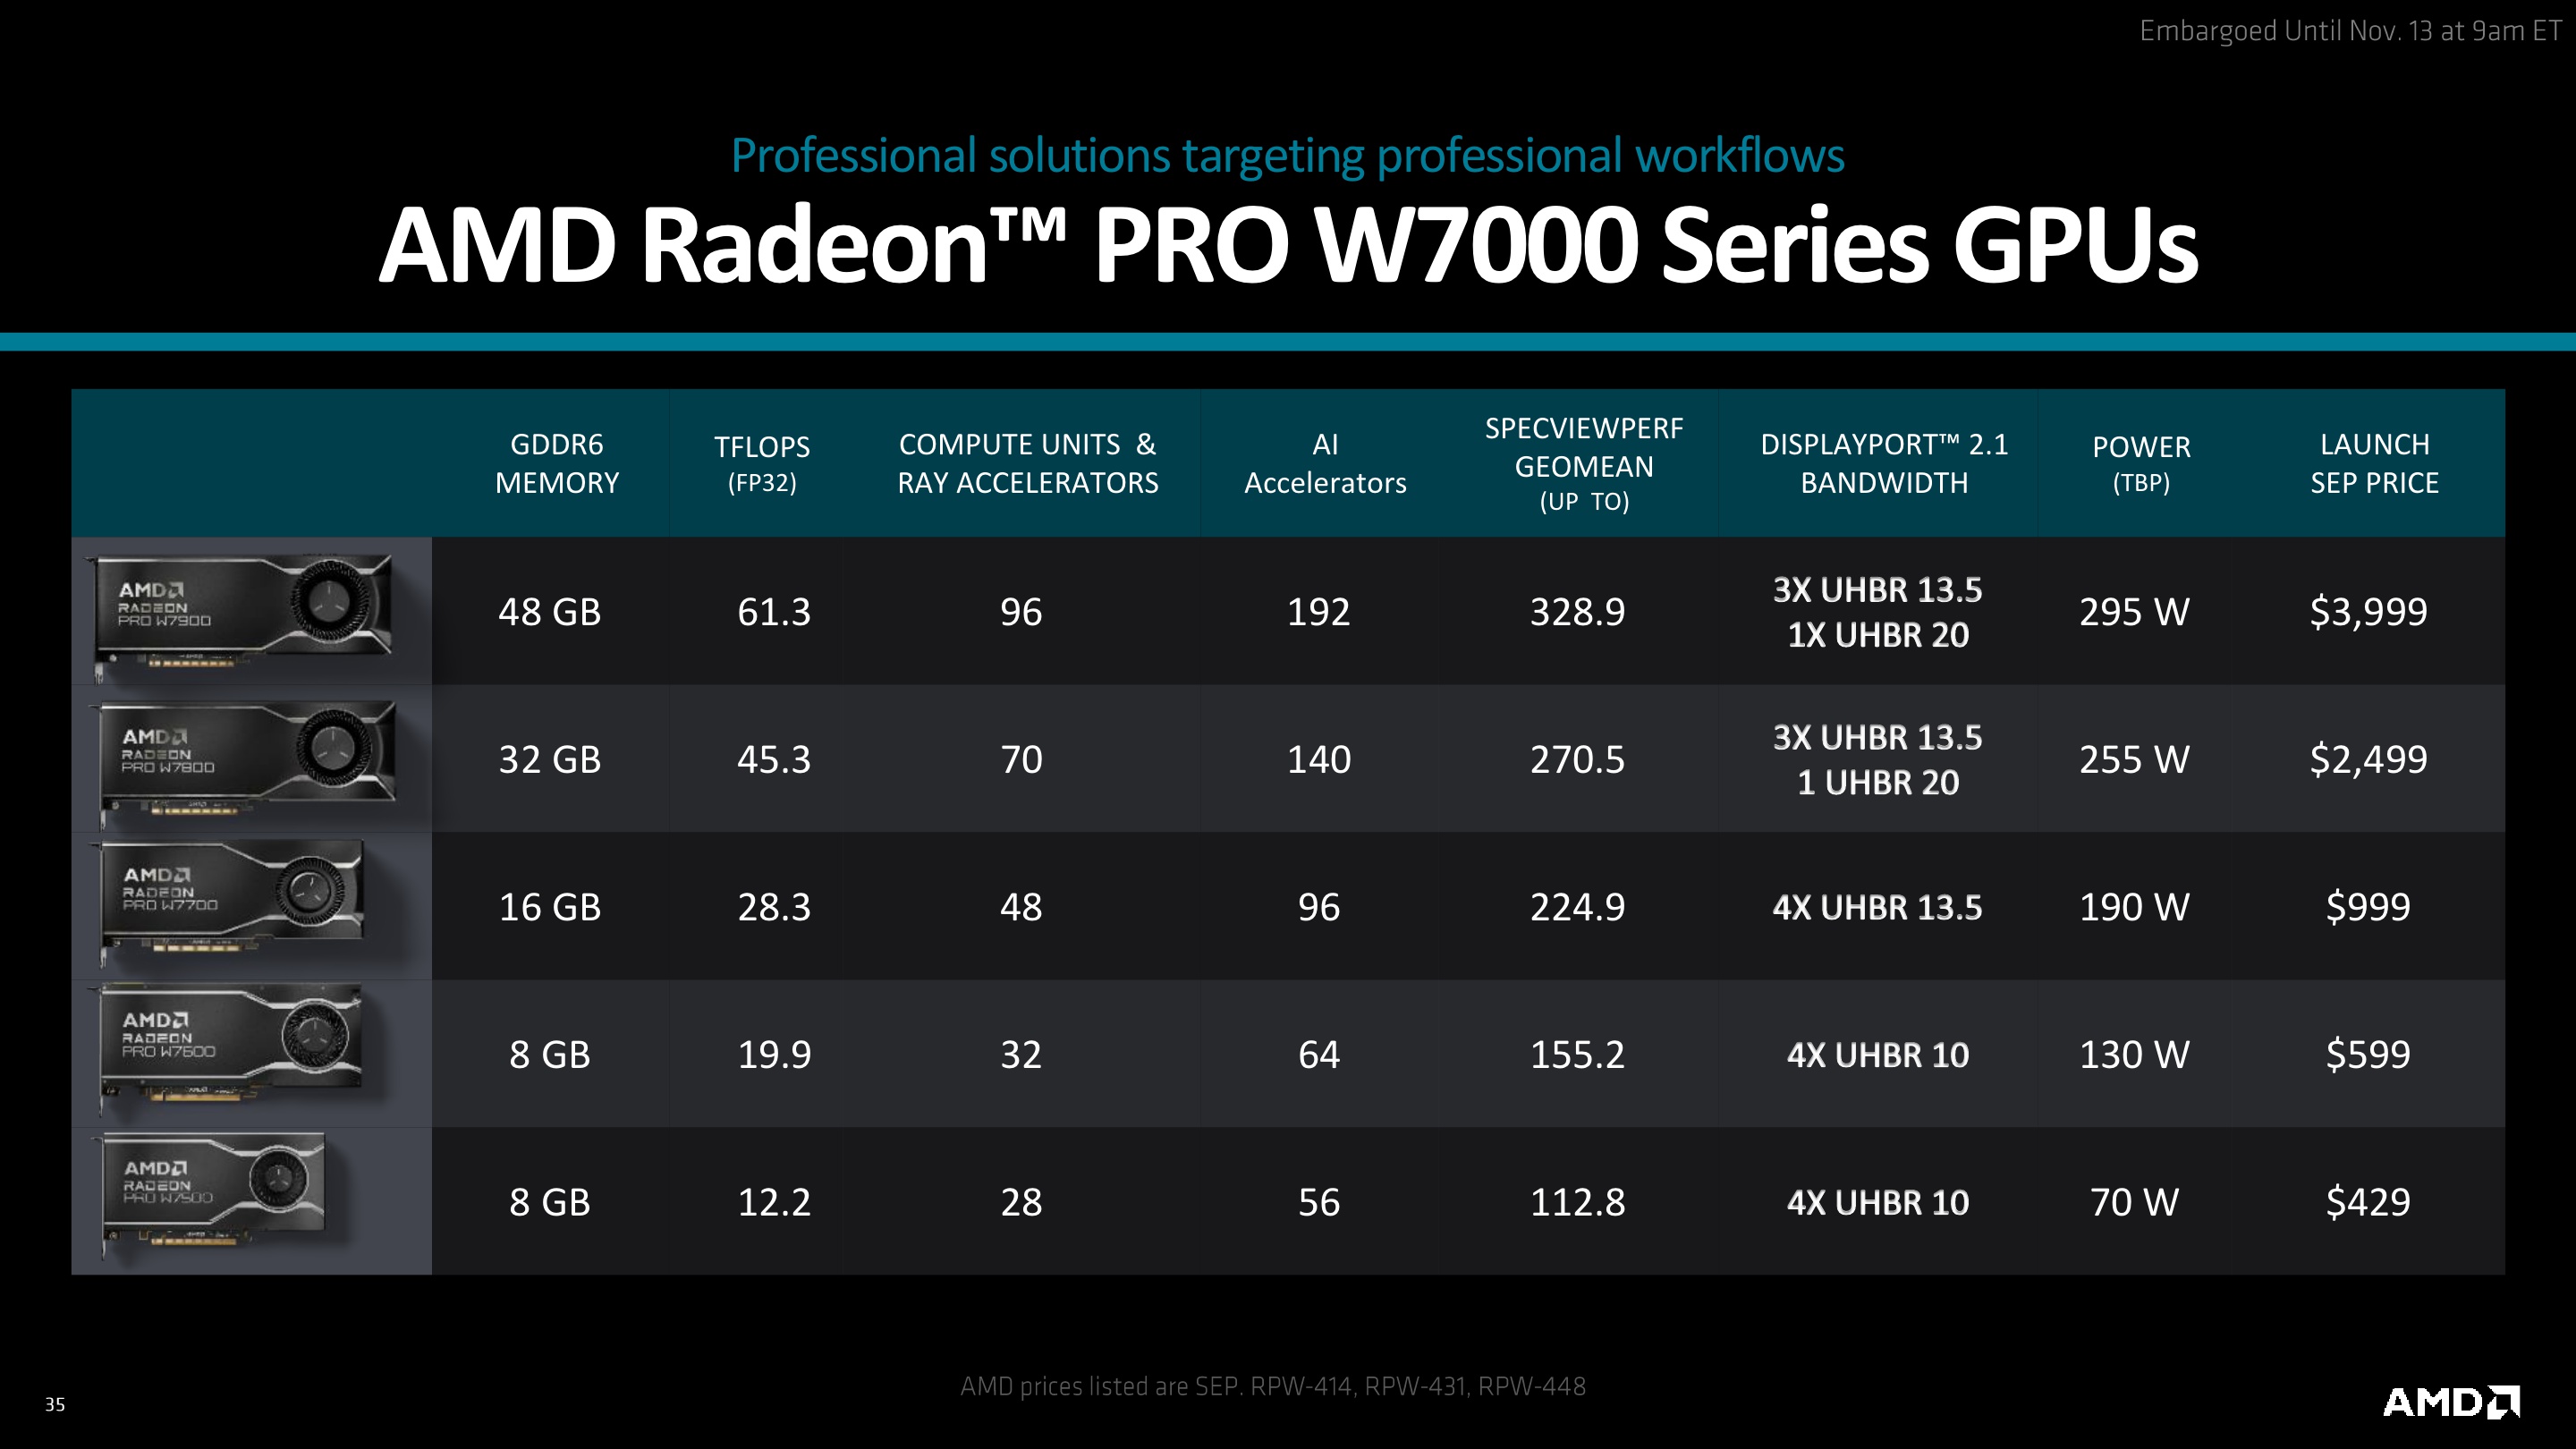 AMD Radeon PRO W7700 Press Deck - LEGAL-BRAND APPROVED_FINAL_35.jpg